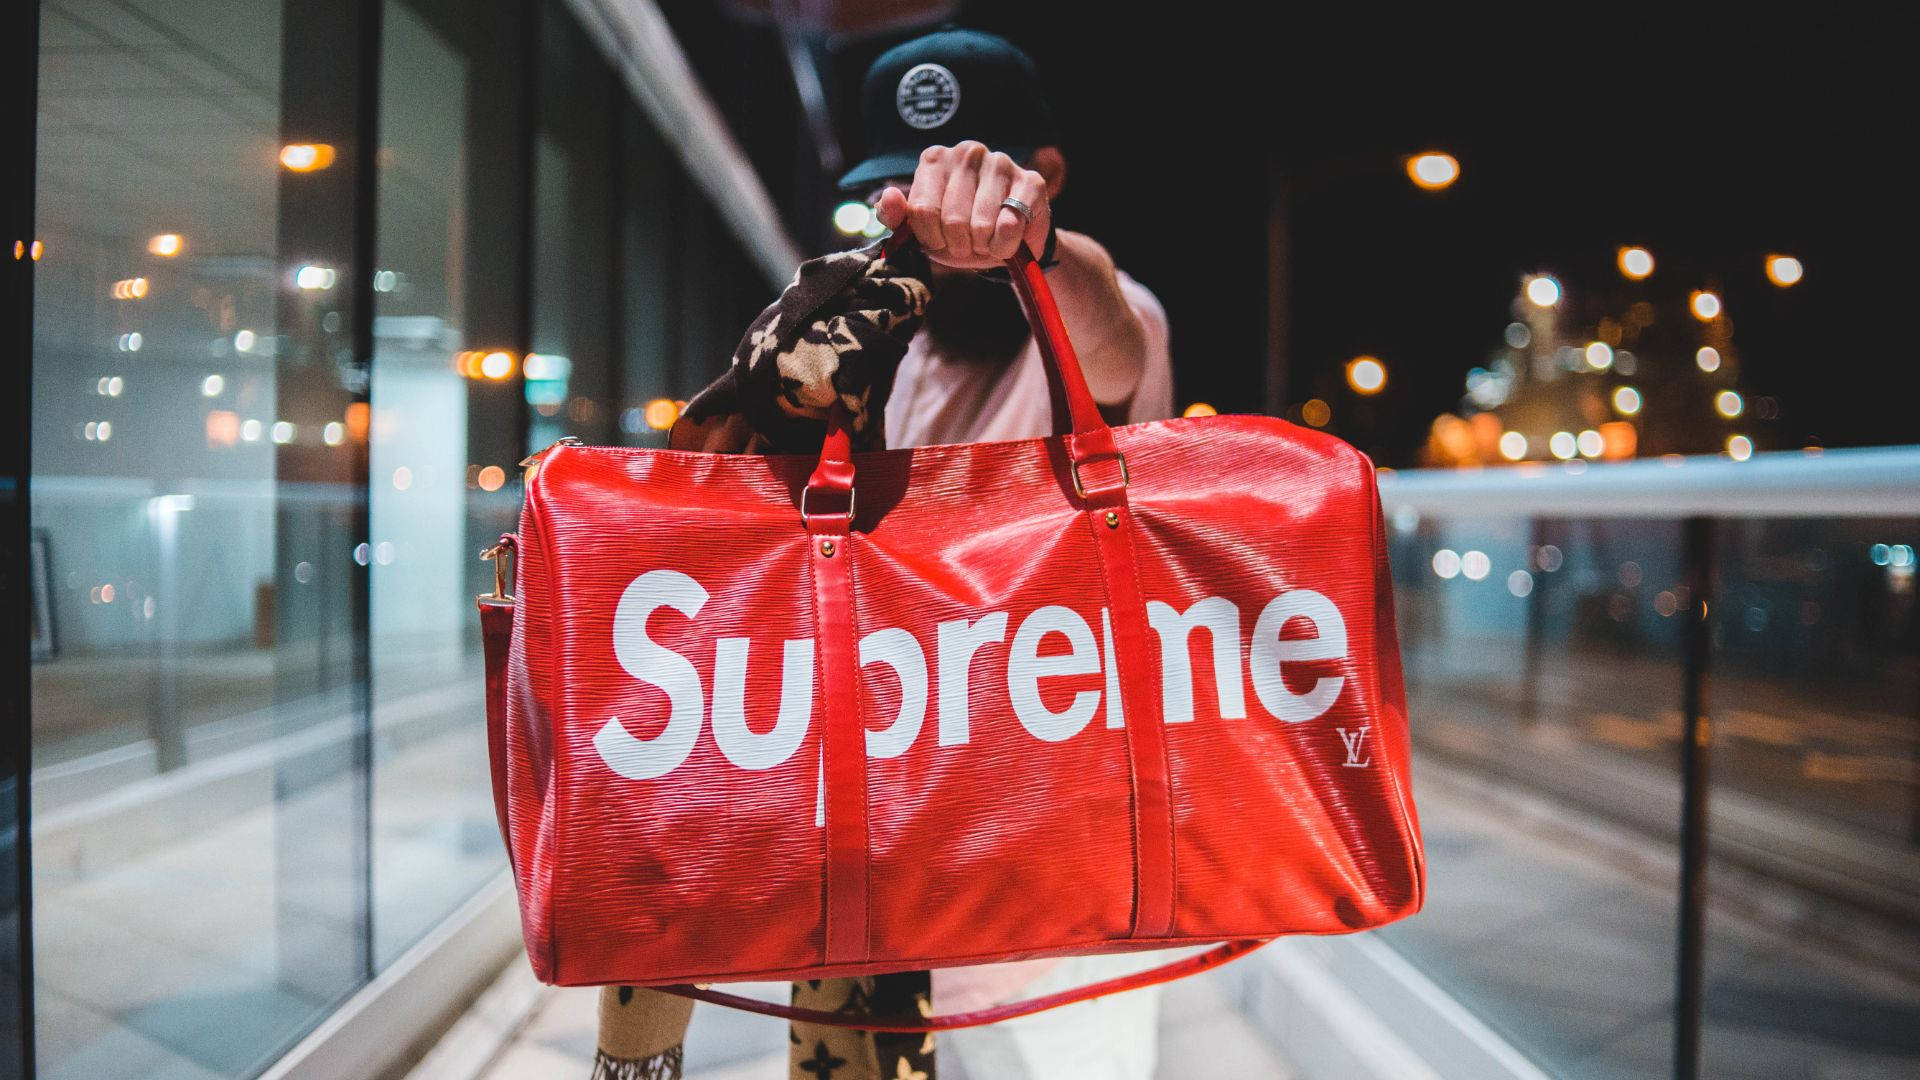 Cool Supreme Red Bag Background